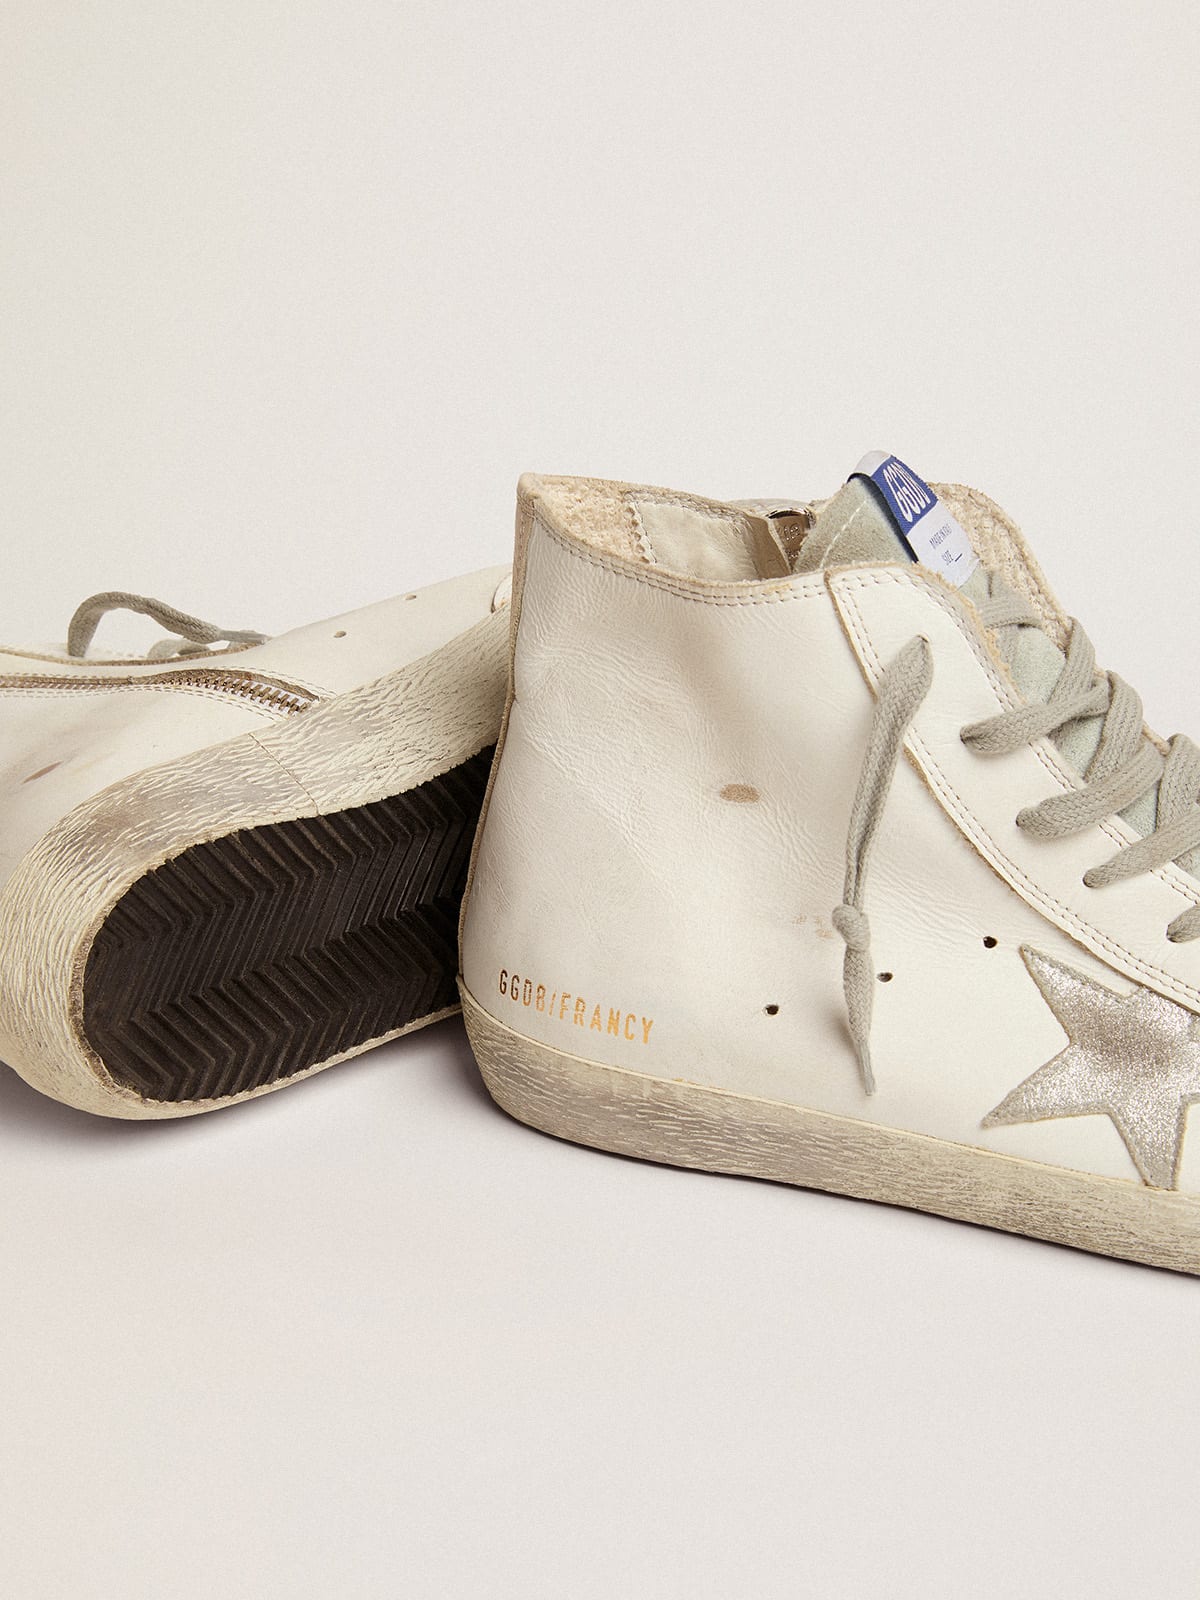 Golden Goose - Sneakers Francy in pelle con stella in camoscio argentato in 